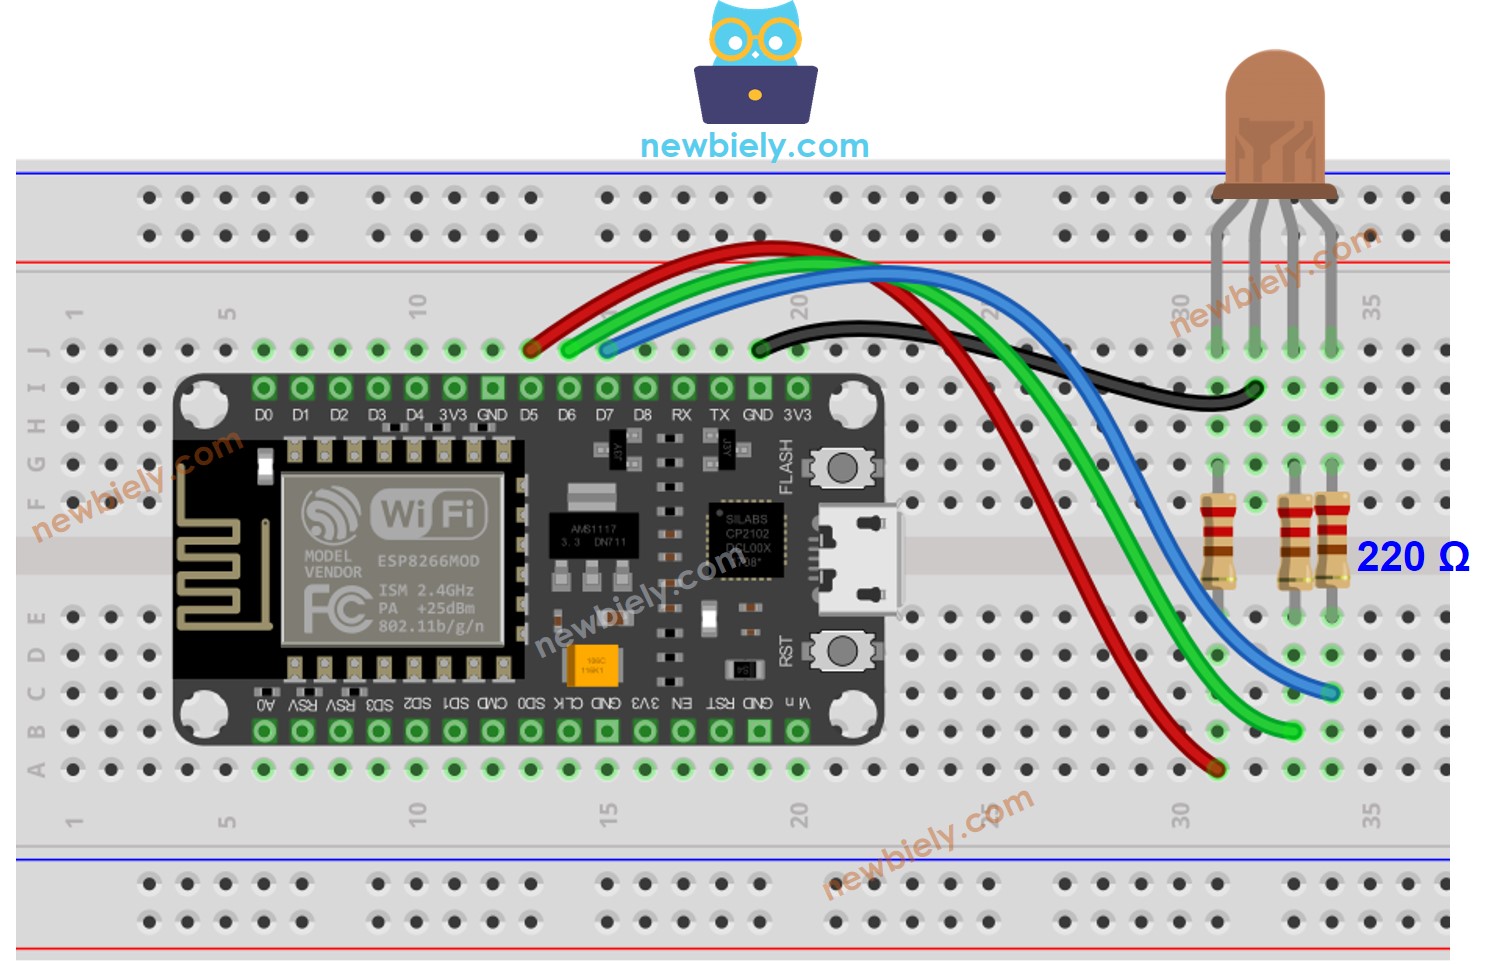 The wiring diagram between ESP8266 NodeMCU and RGB LED